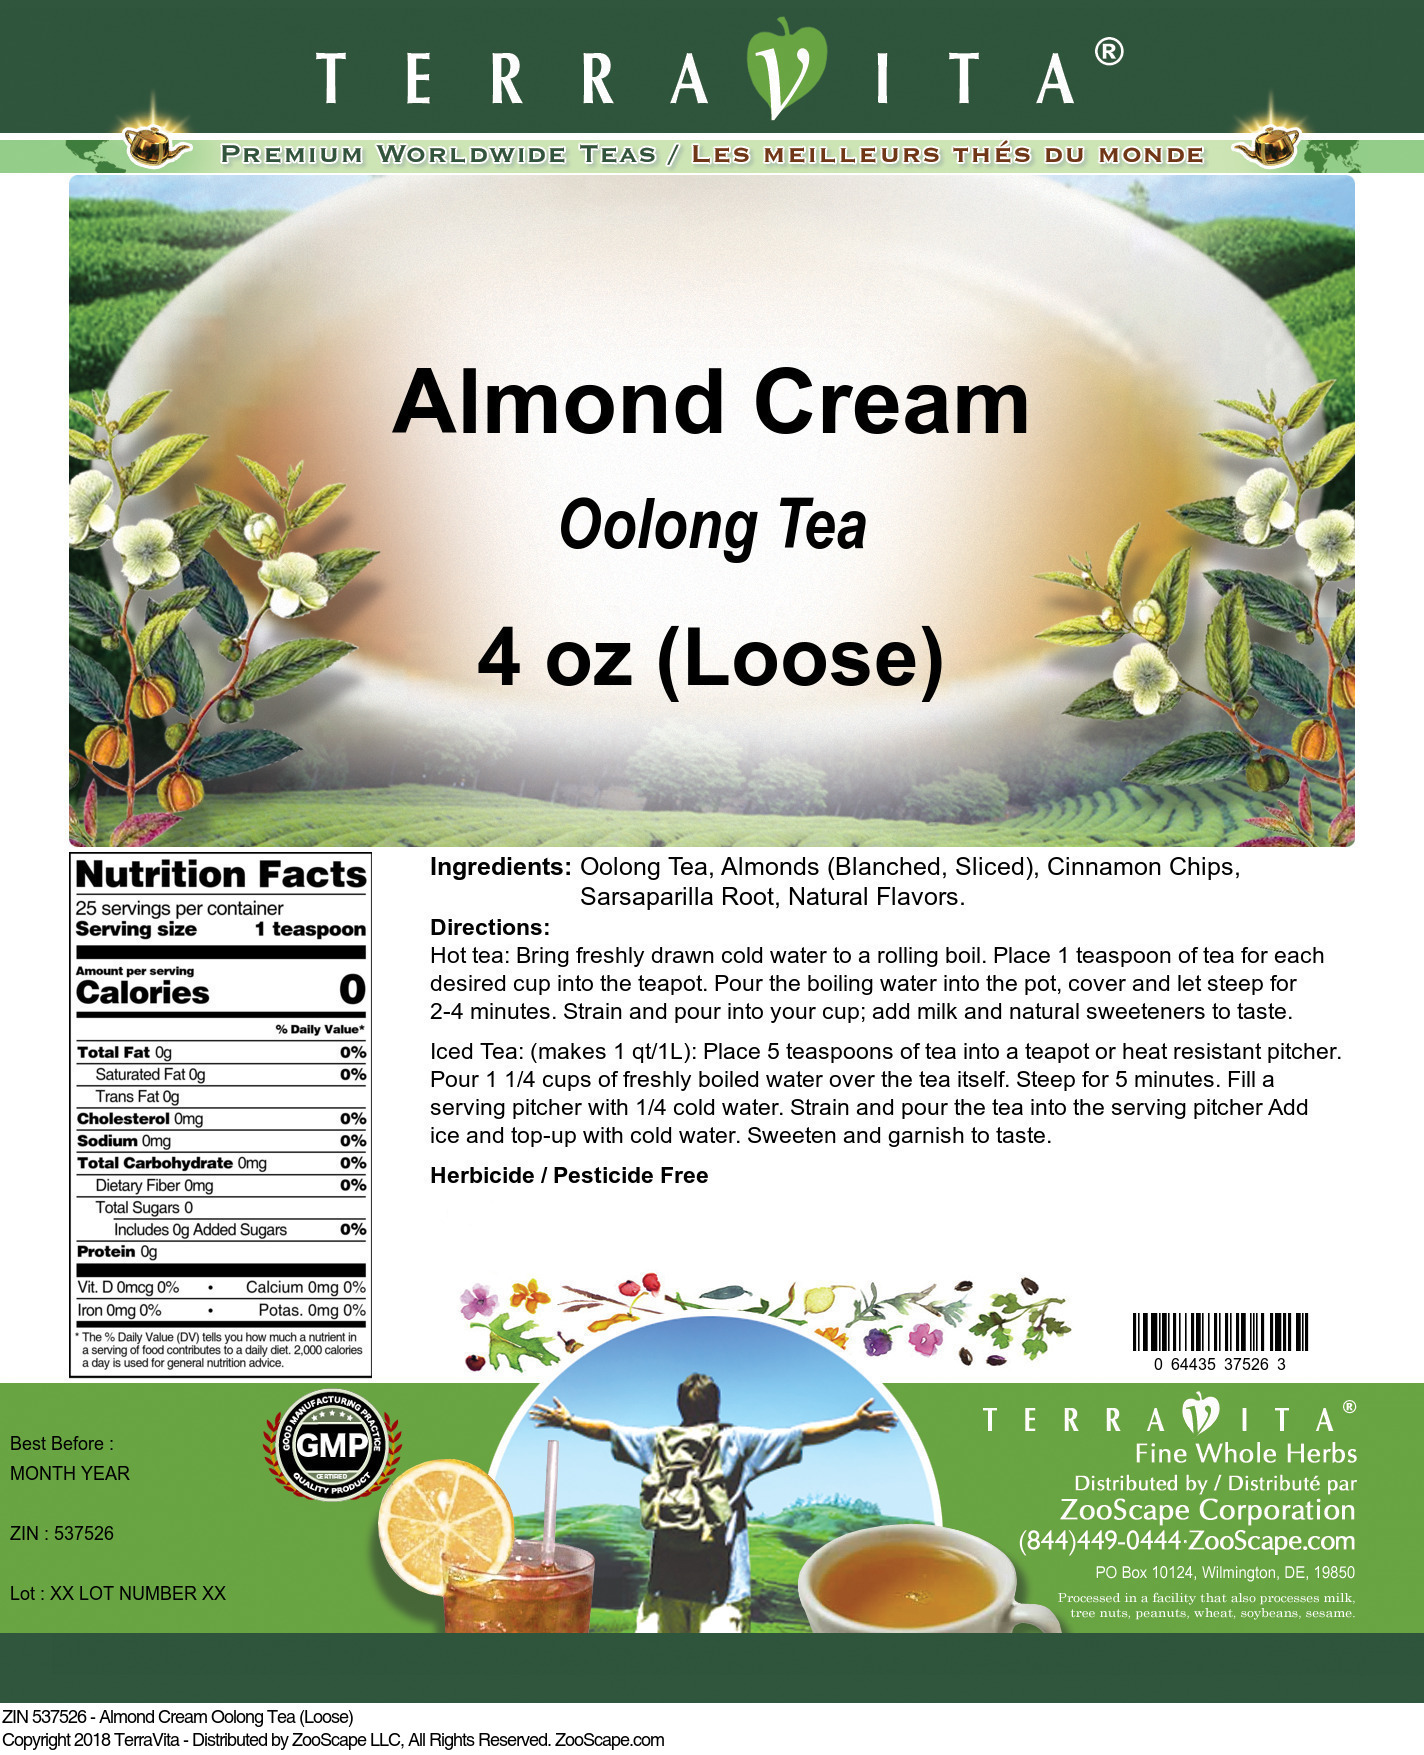 Almond Cream Oolong Tea (Loose) - Label